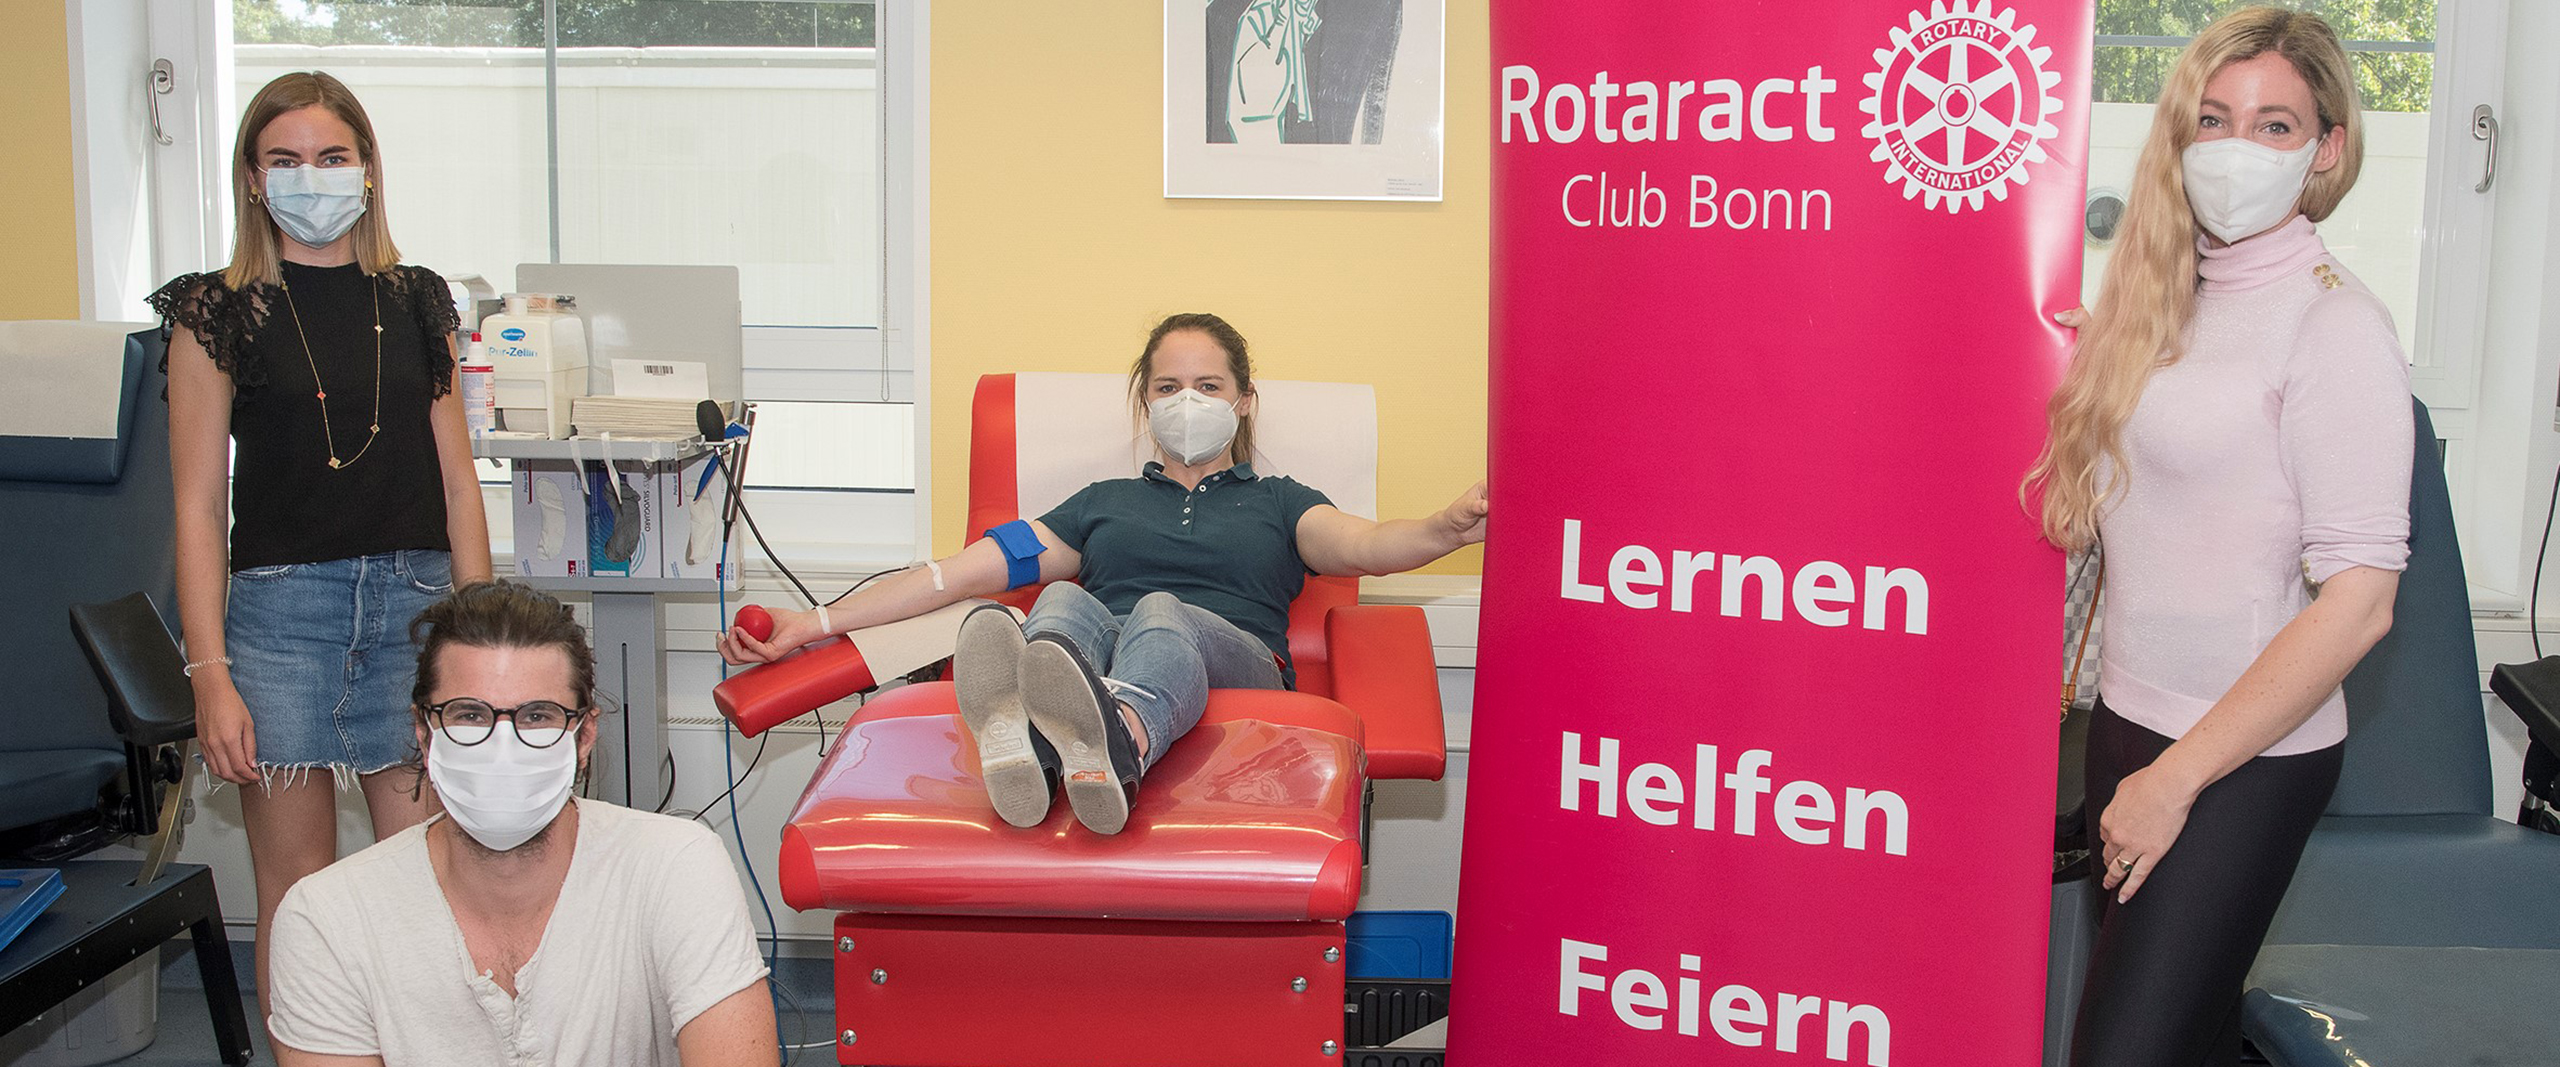 Die Bonner Rotaracter Ellen Hofmann, Raoul Nicolodi, Dr. Anne Zillekens und Friederike Bochnick beim Blutspenden